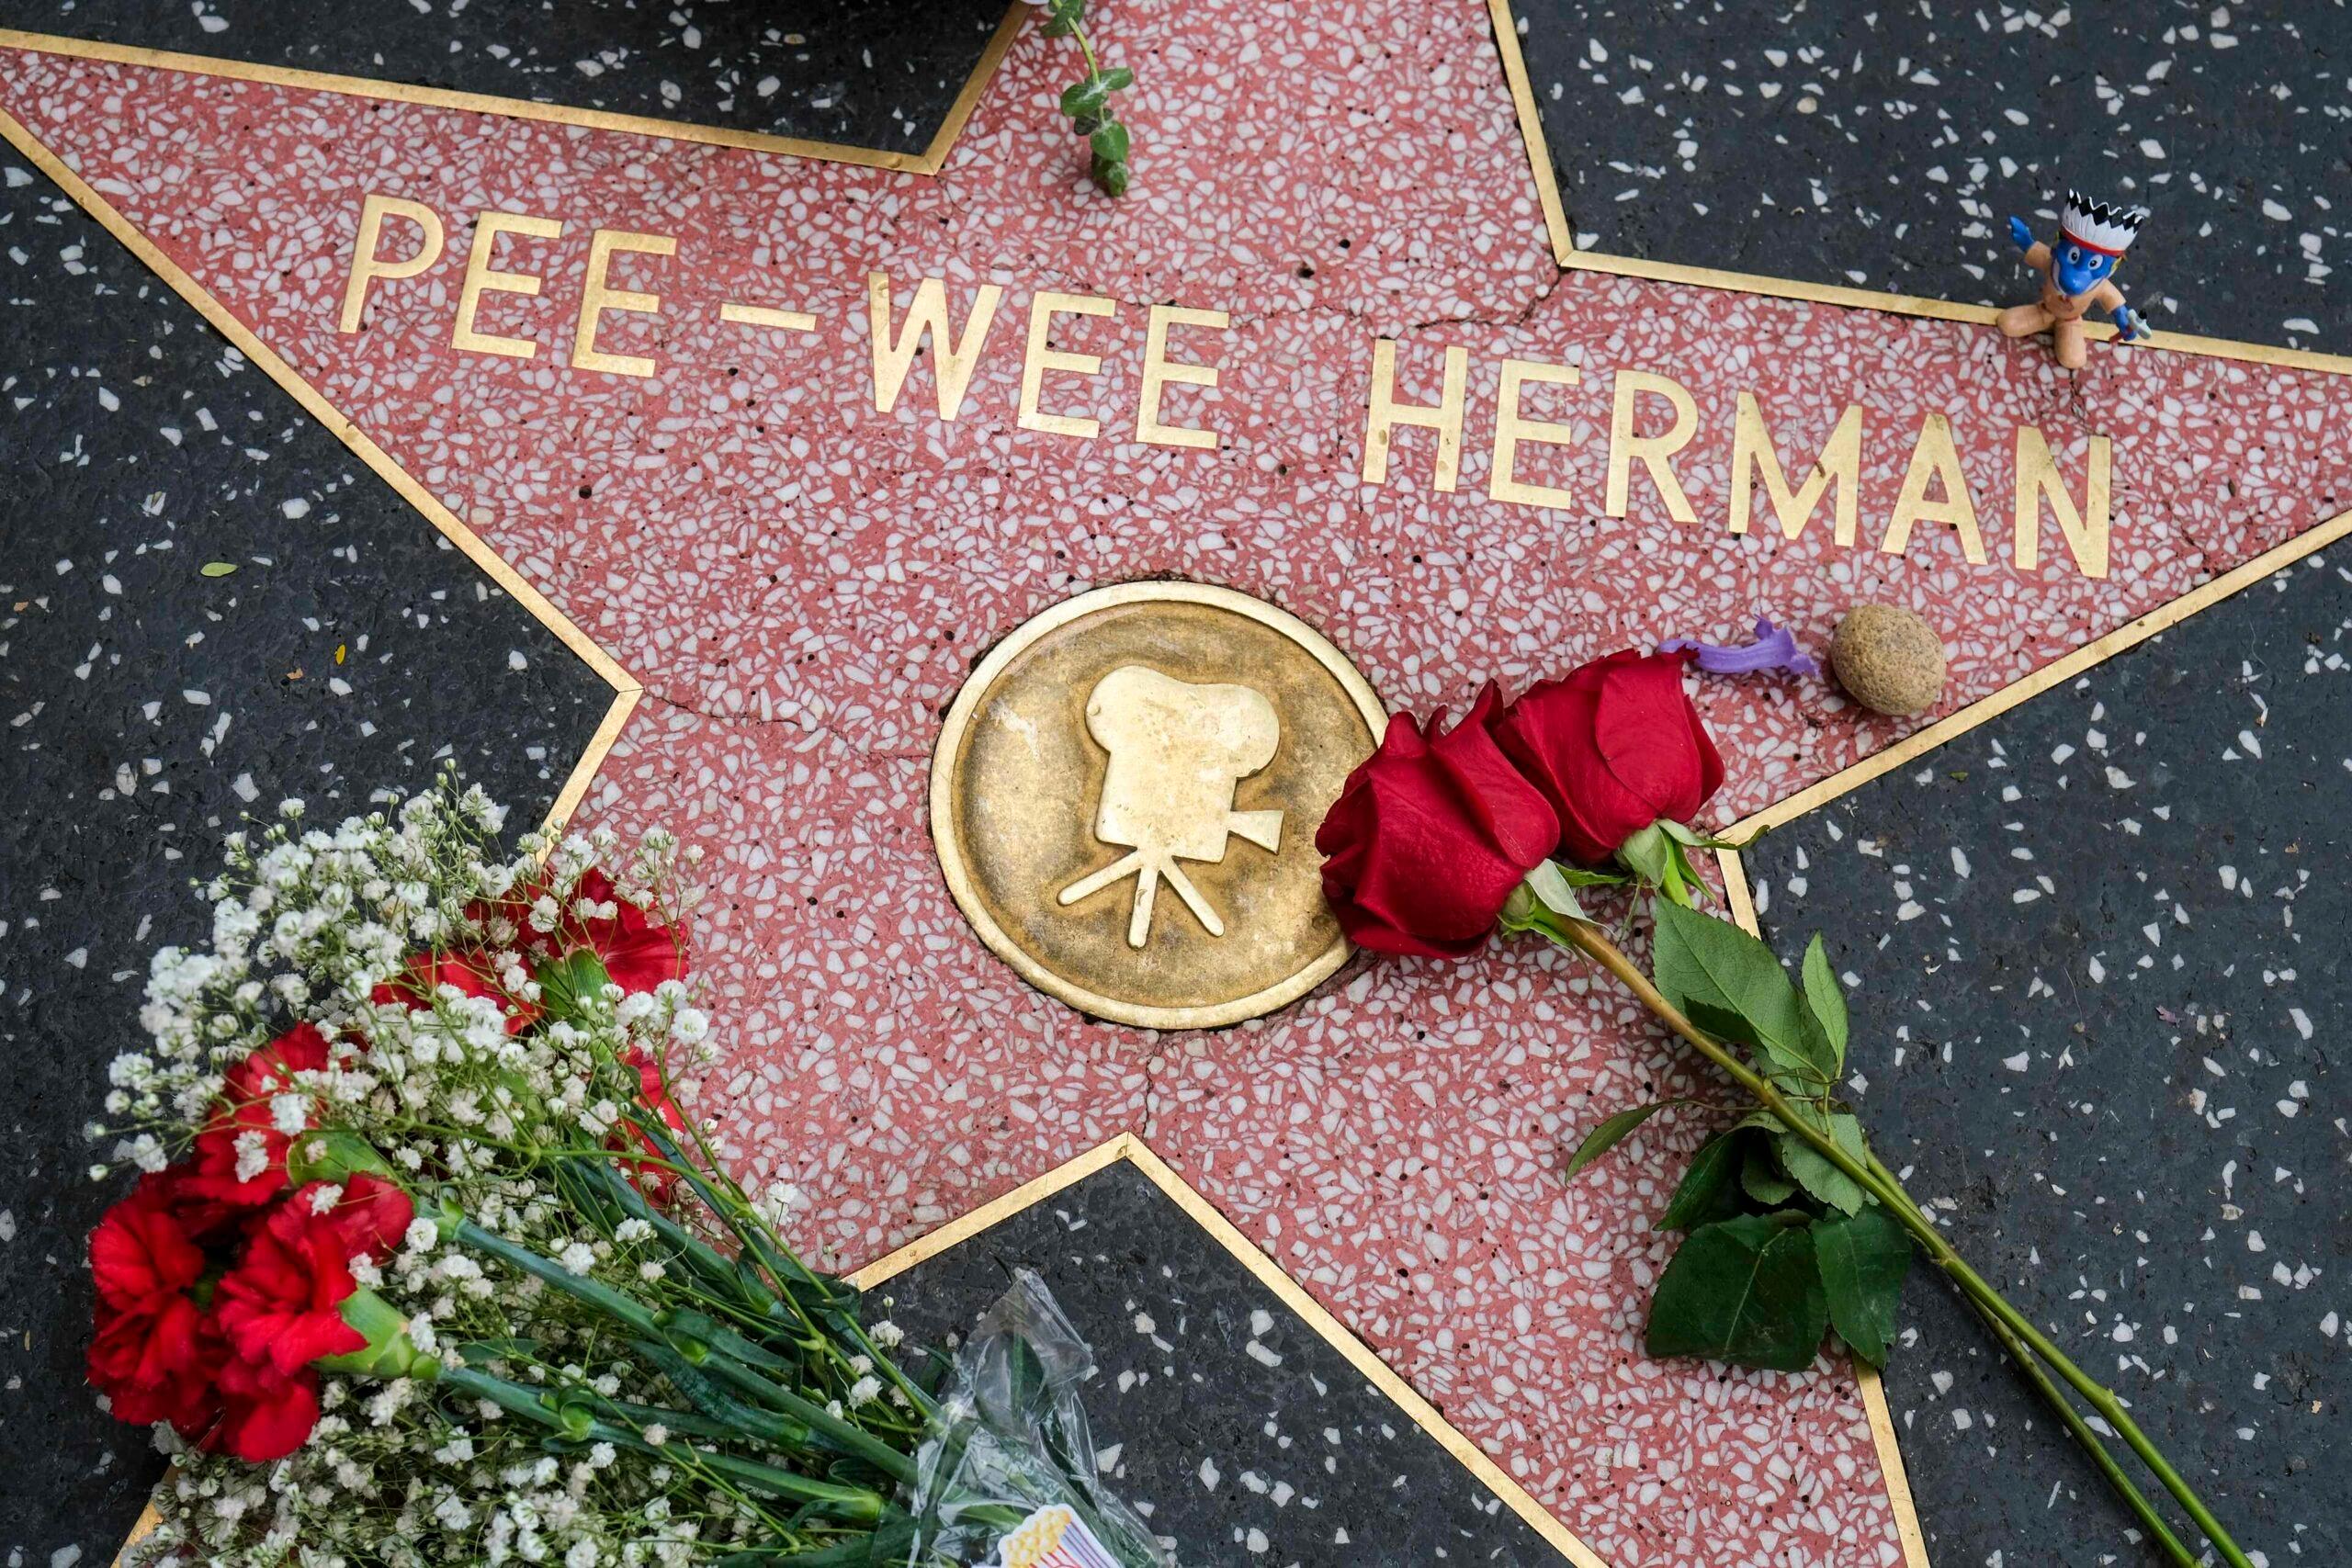 Pee-wee Herman's Death Certificate: Paul Reubens' Official Cause Of Death Revealed